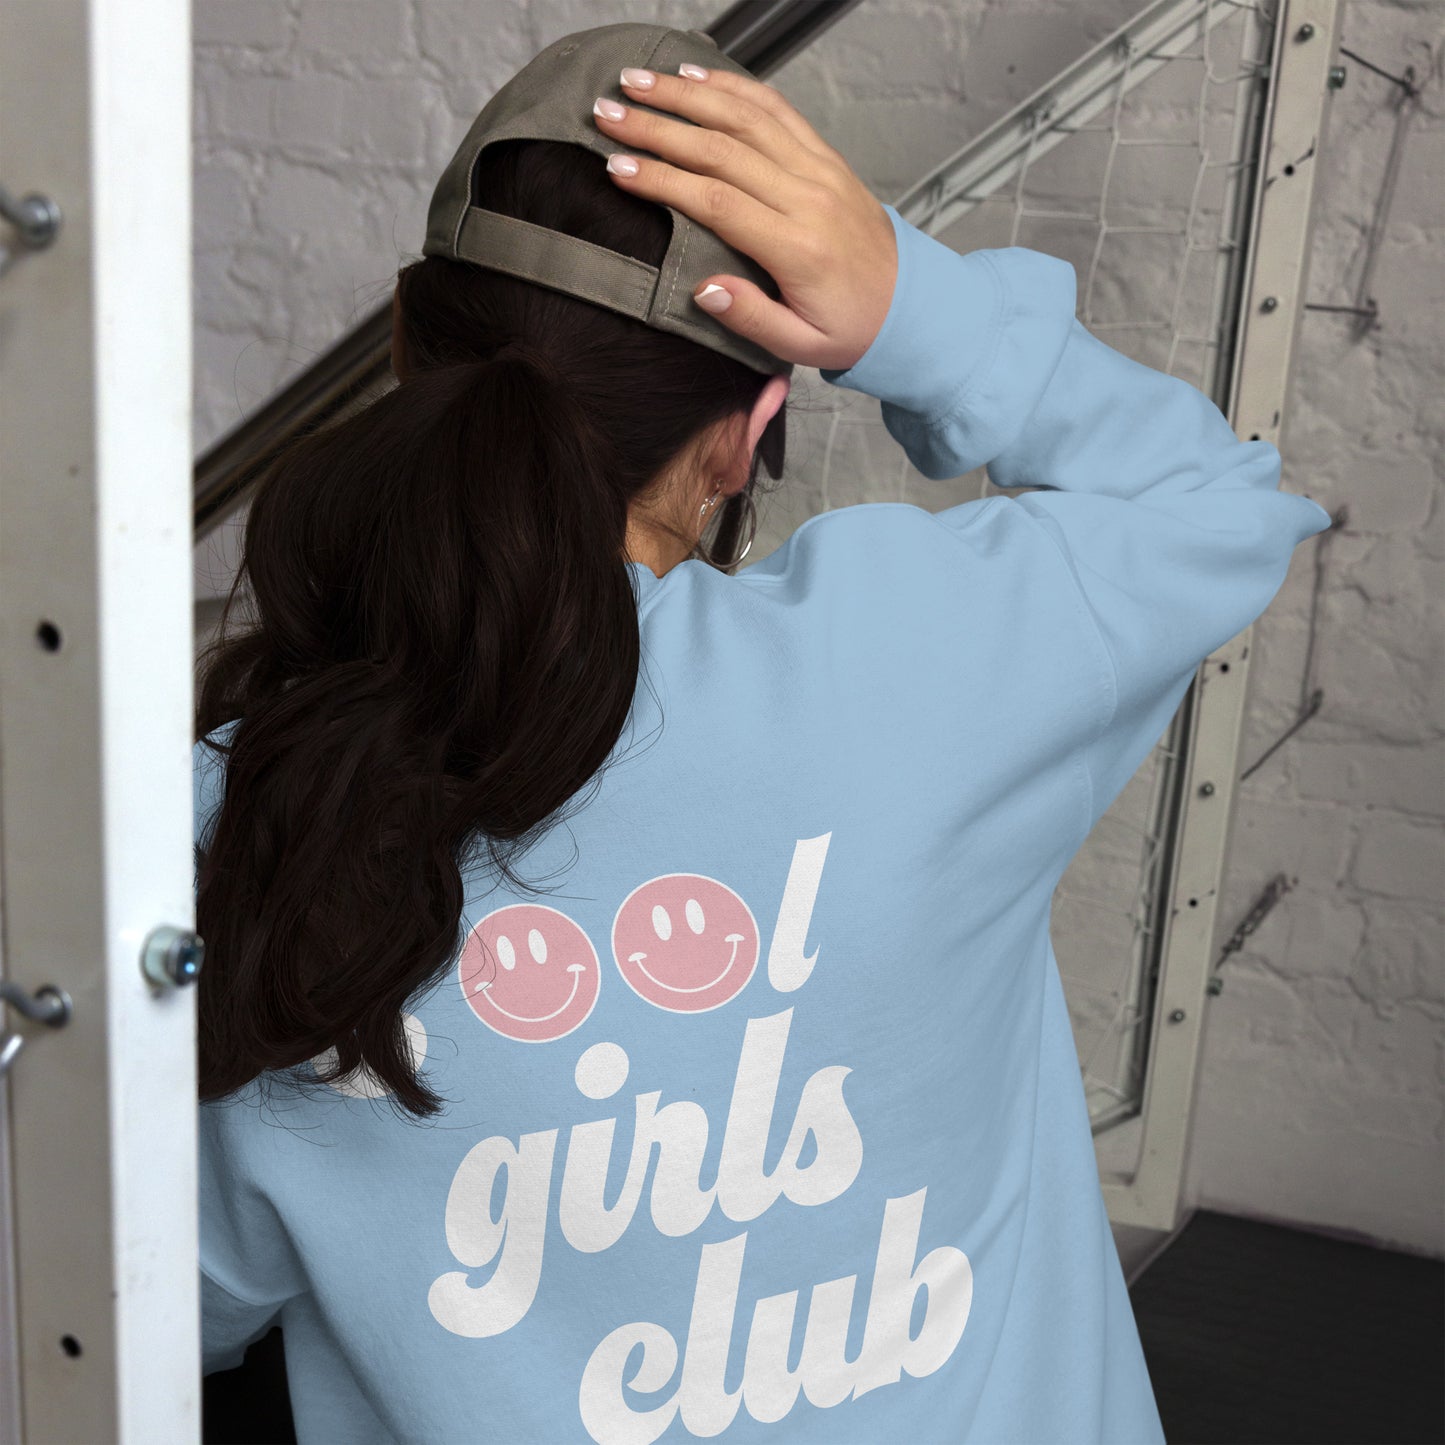 Cool Girls Club Sweatshirt